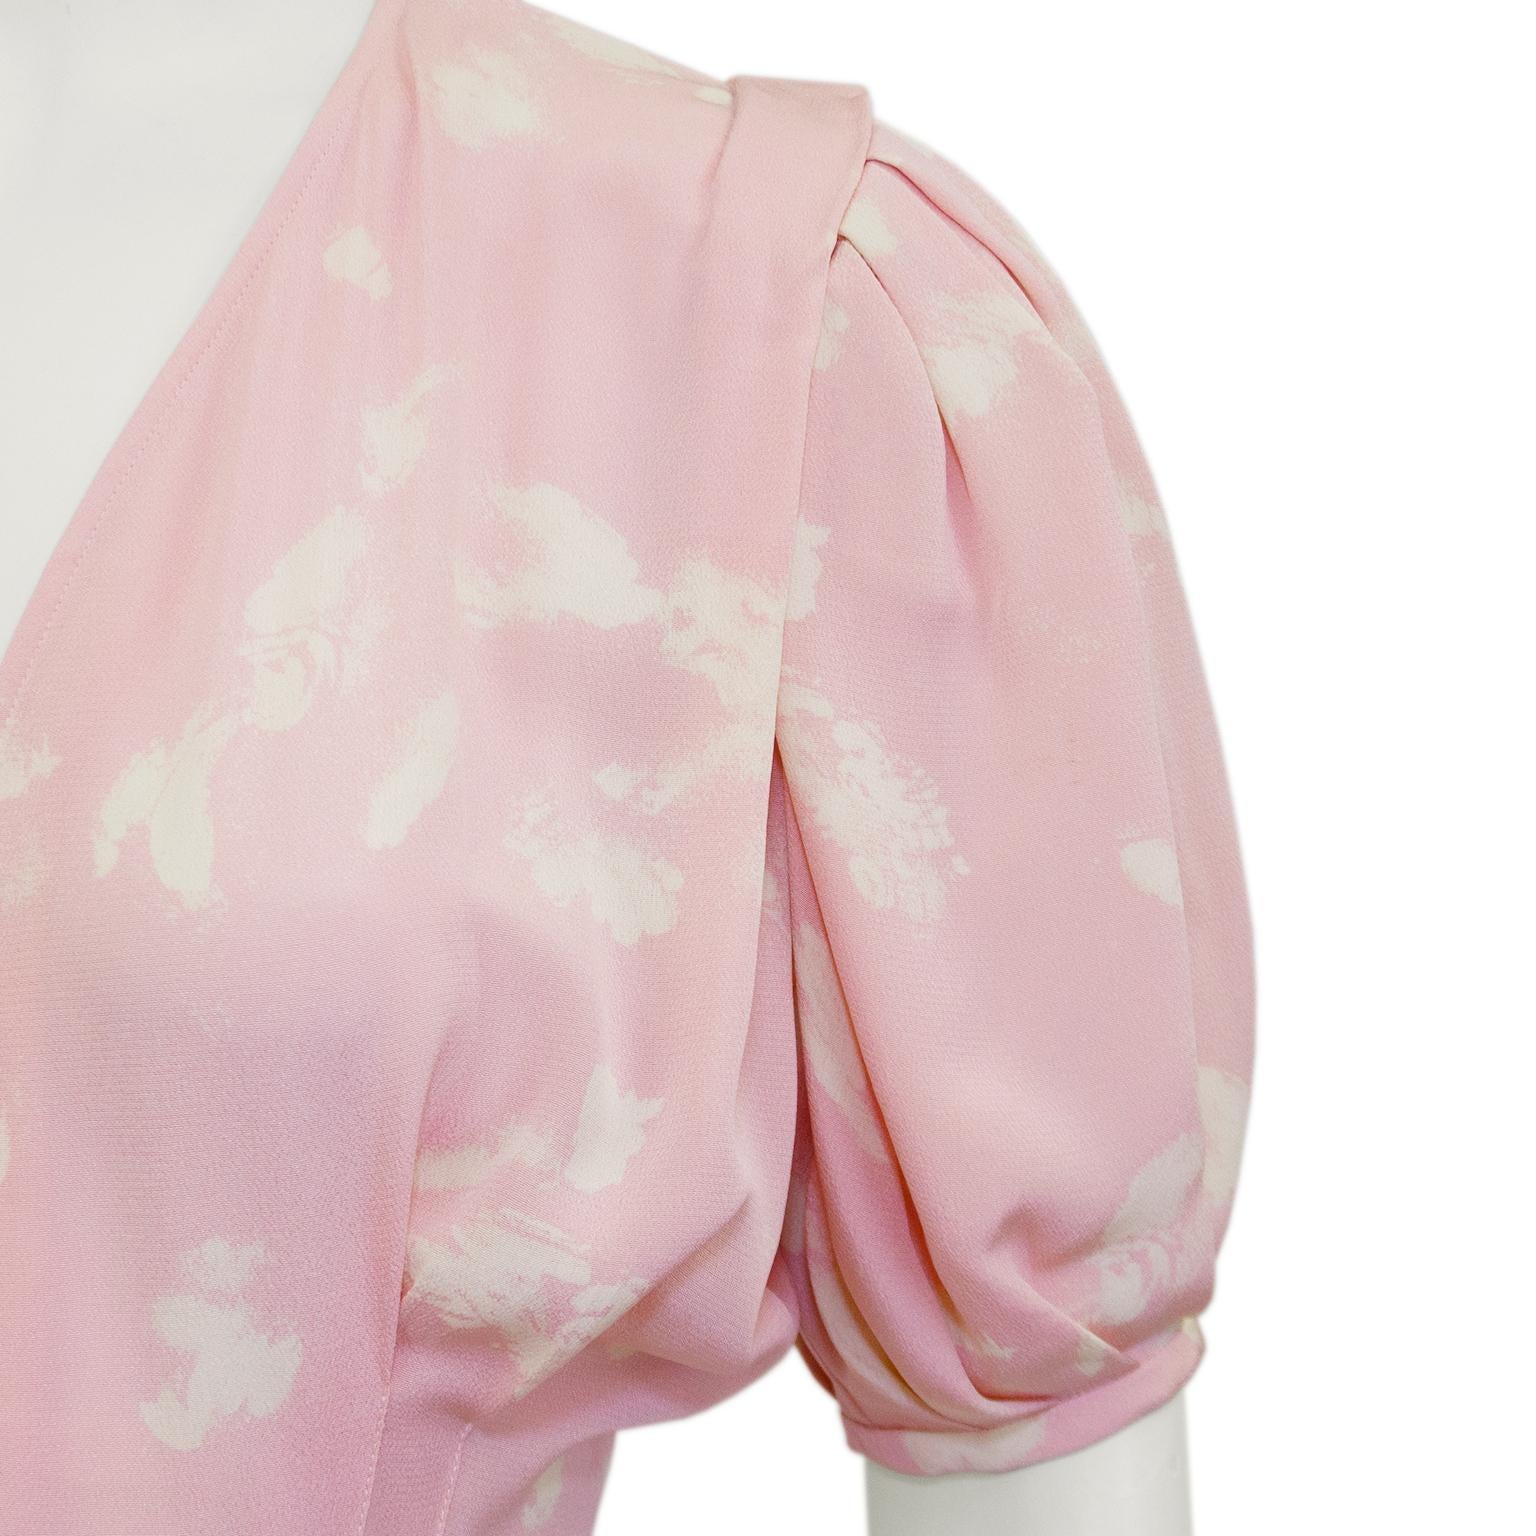 Women's 1980s Emmanuel Ungaro Pink and Cream Crepe Dress  For Sale